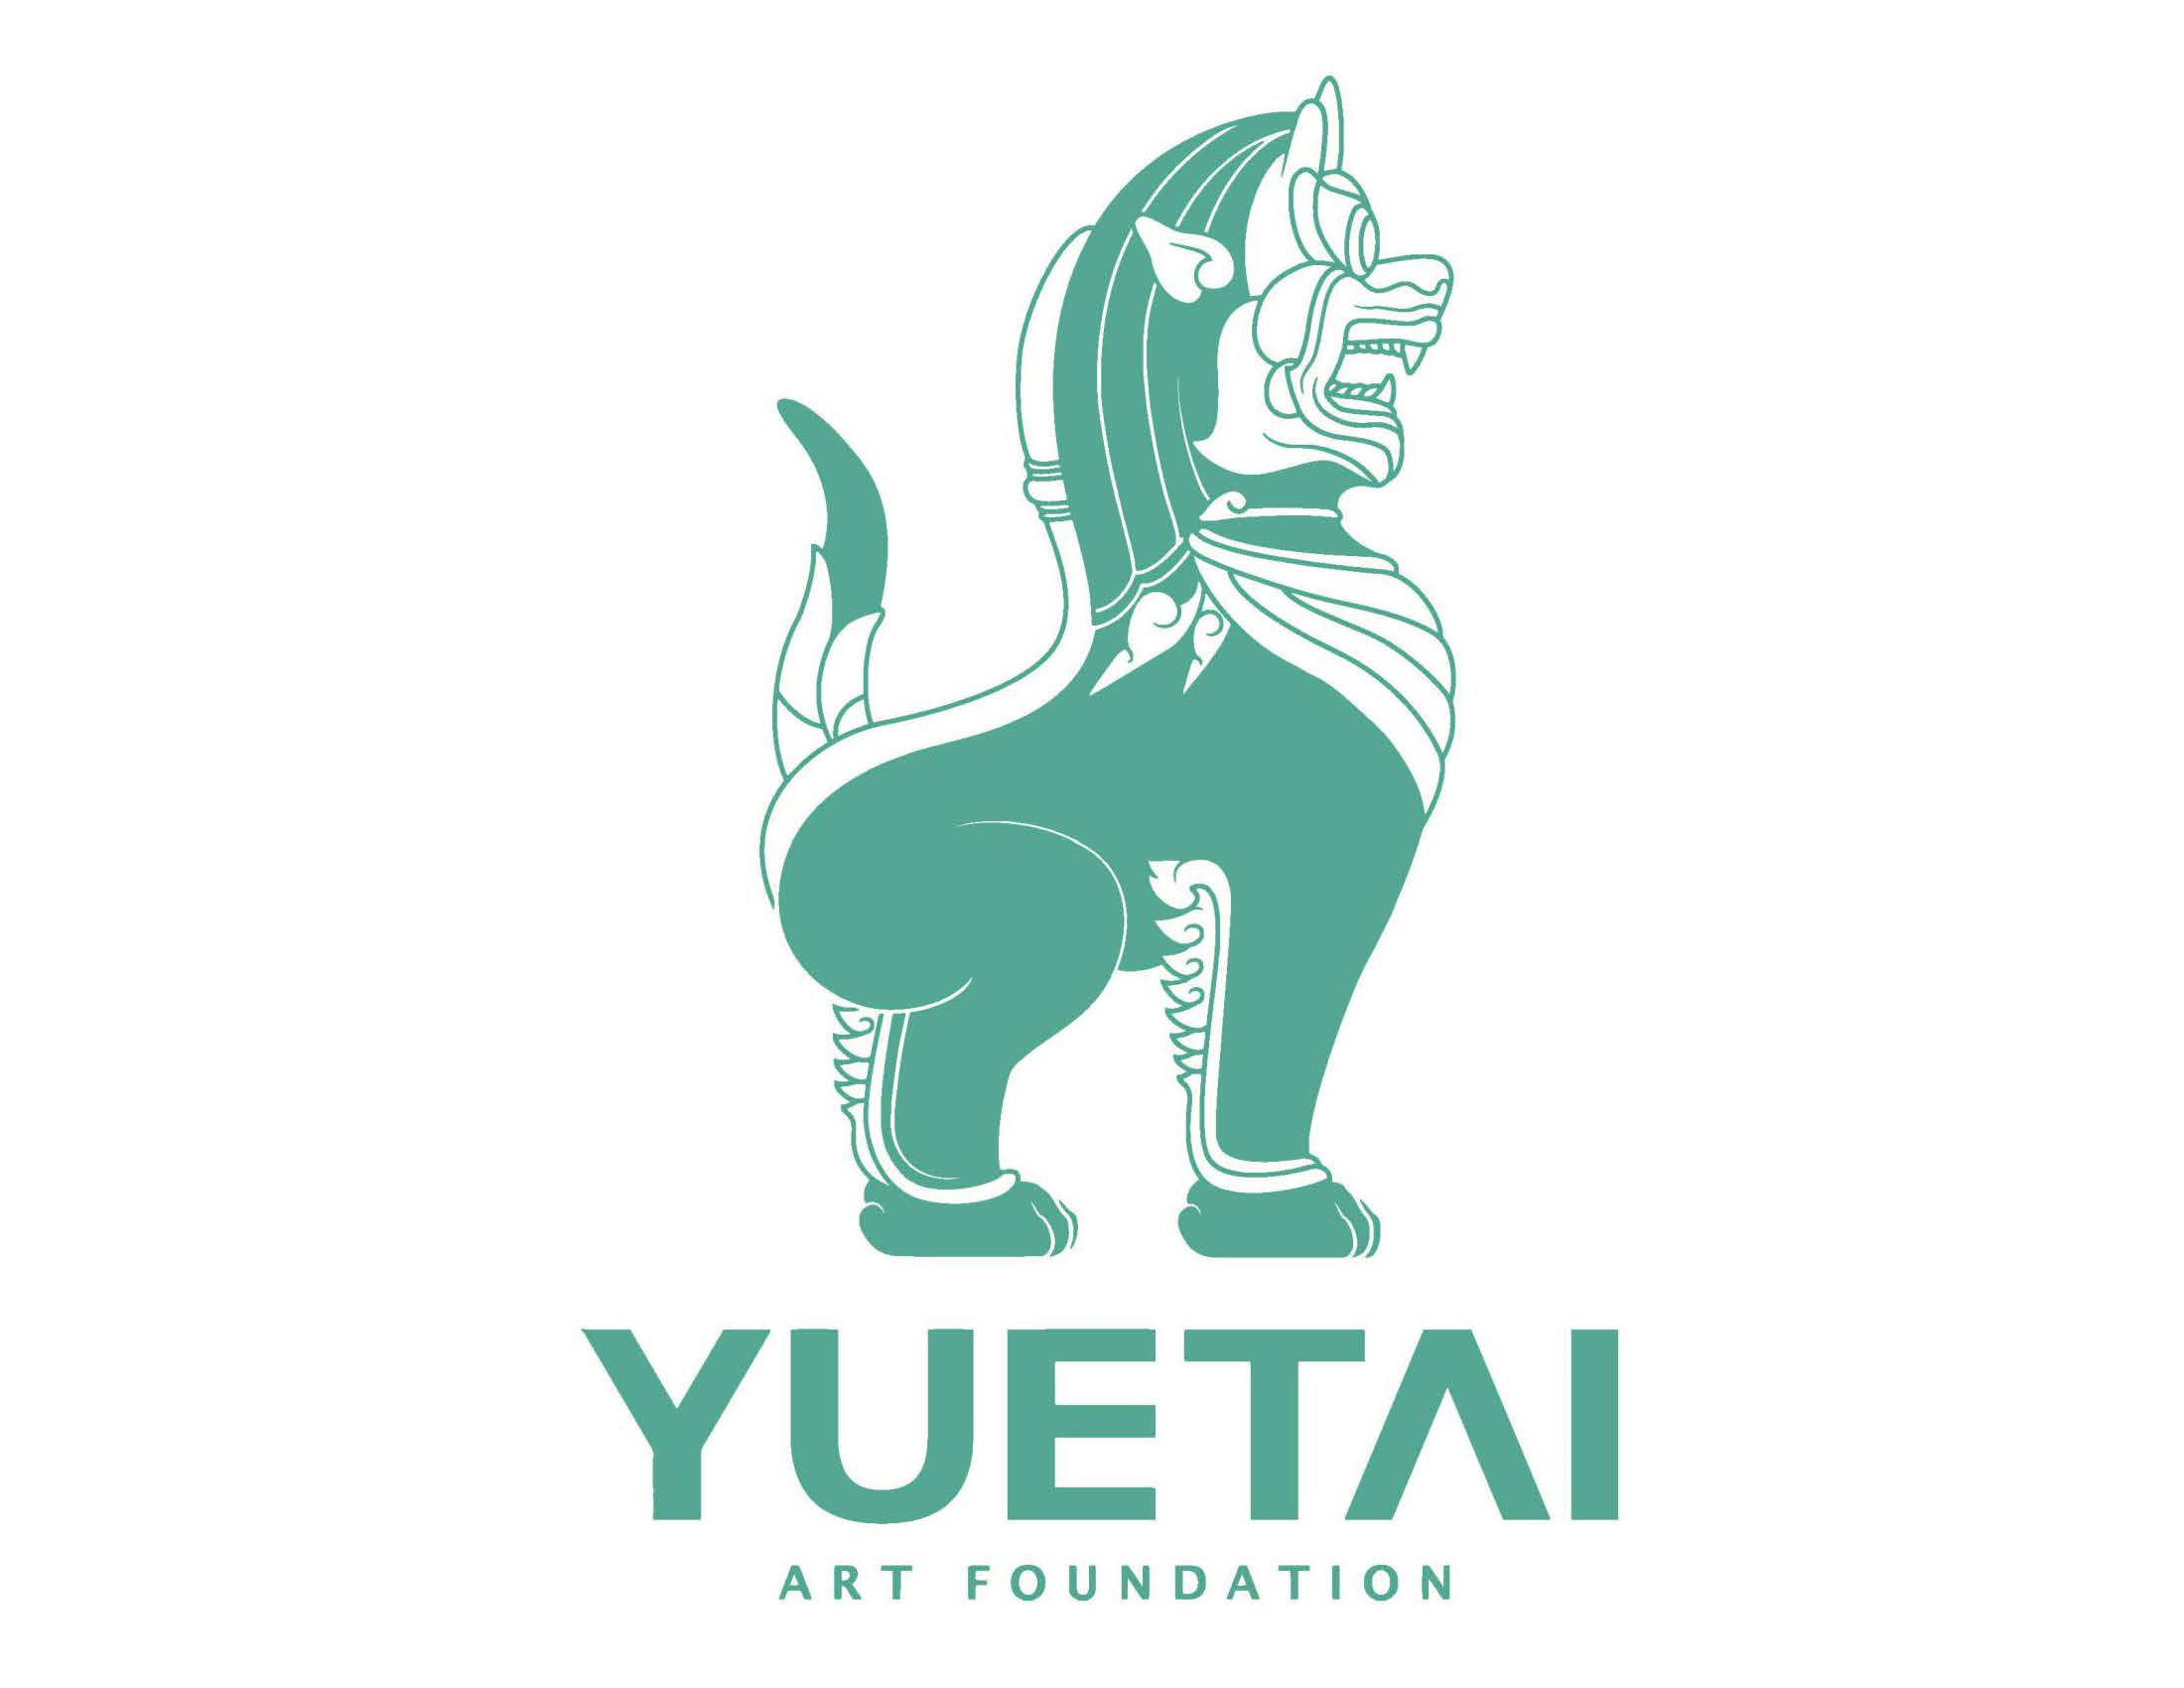 YUETAI ART FOUNDATION